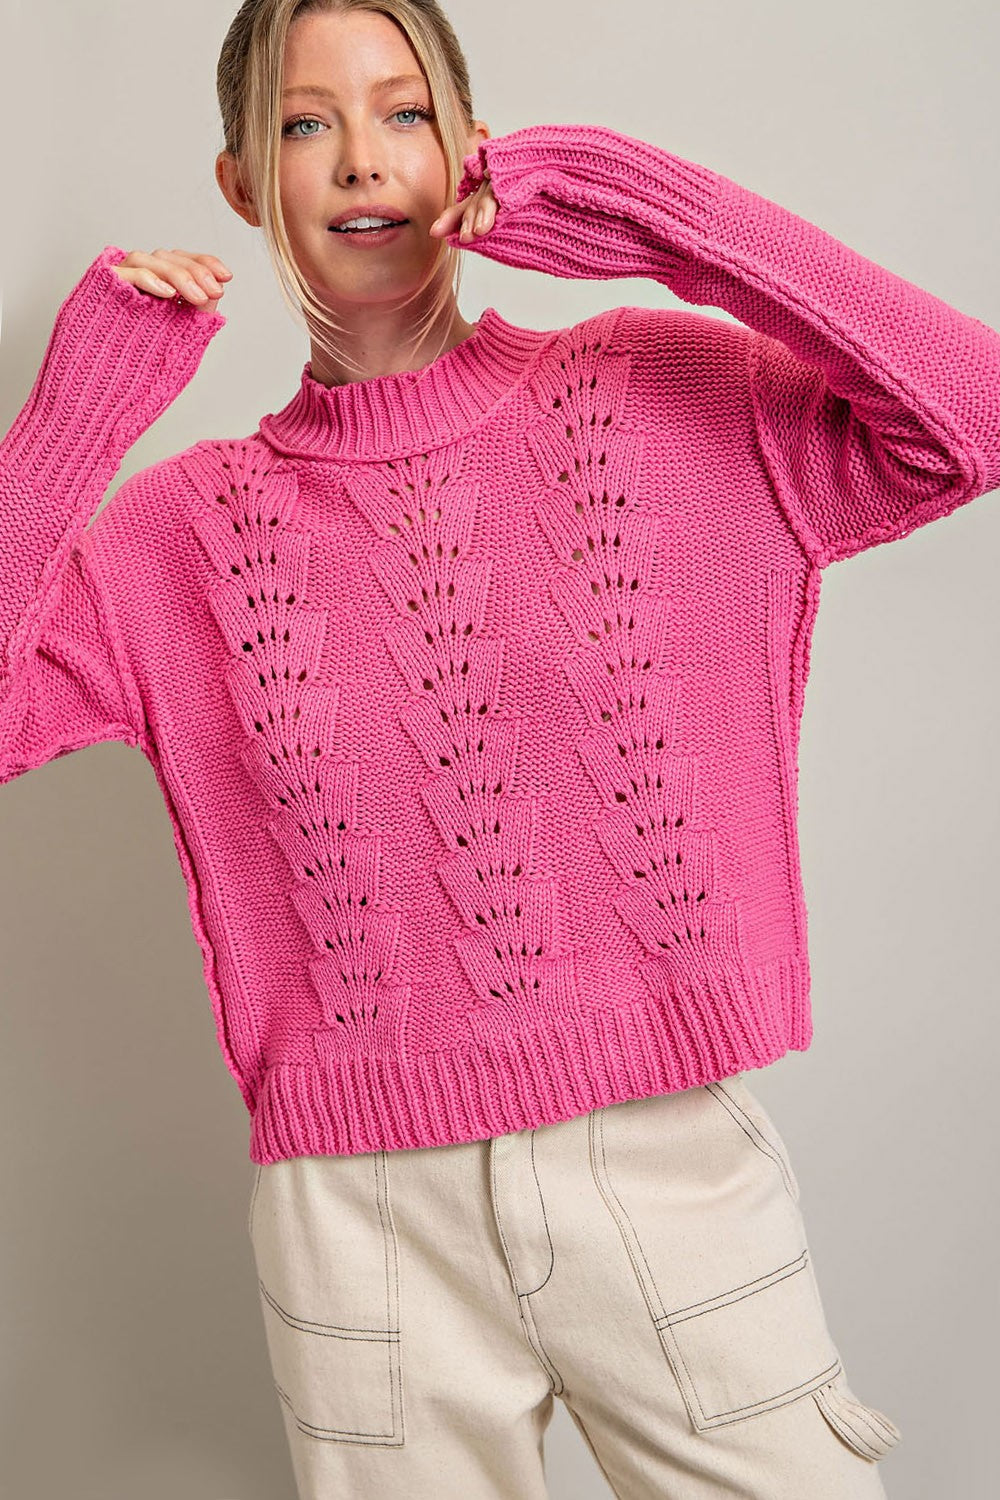 Crochet Long Sleeve Knit Top in Hot Pink